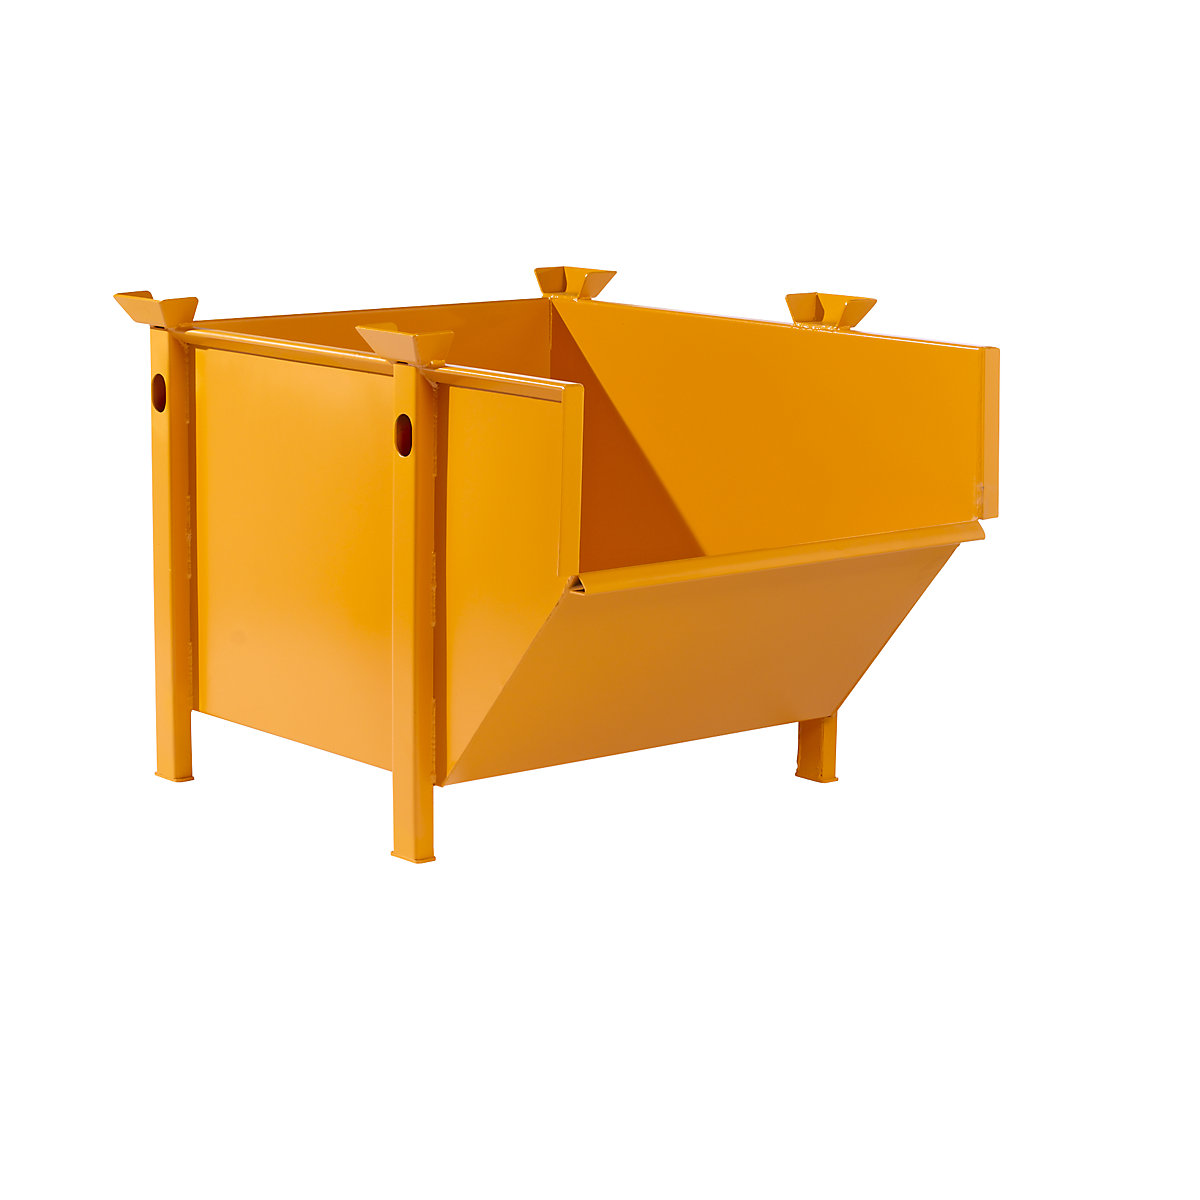 Sheet steel container – eurokraft pro, capacity 0.5 m³, without folding chute, yellow orange-7